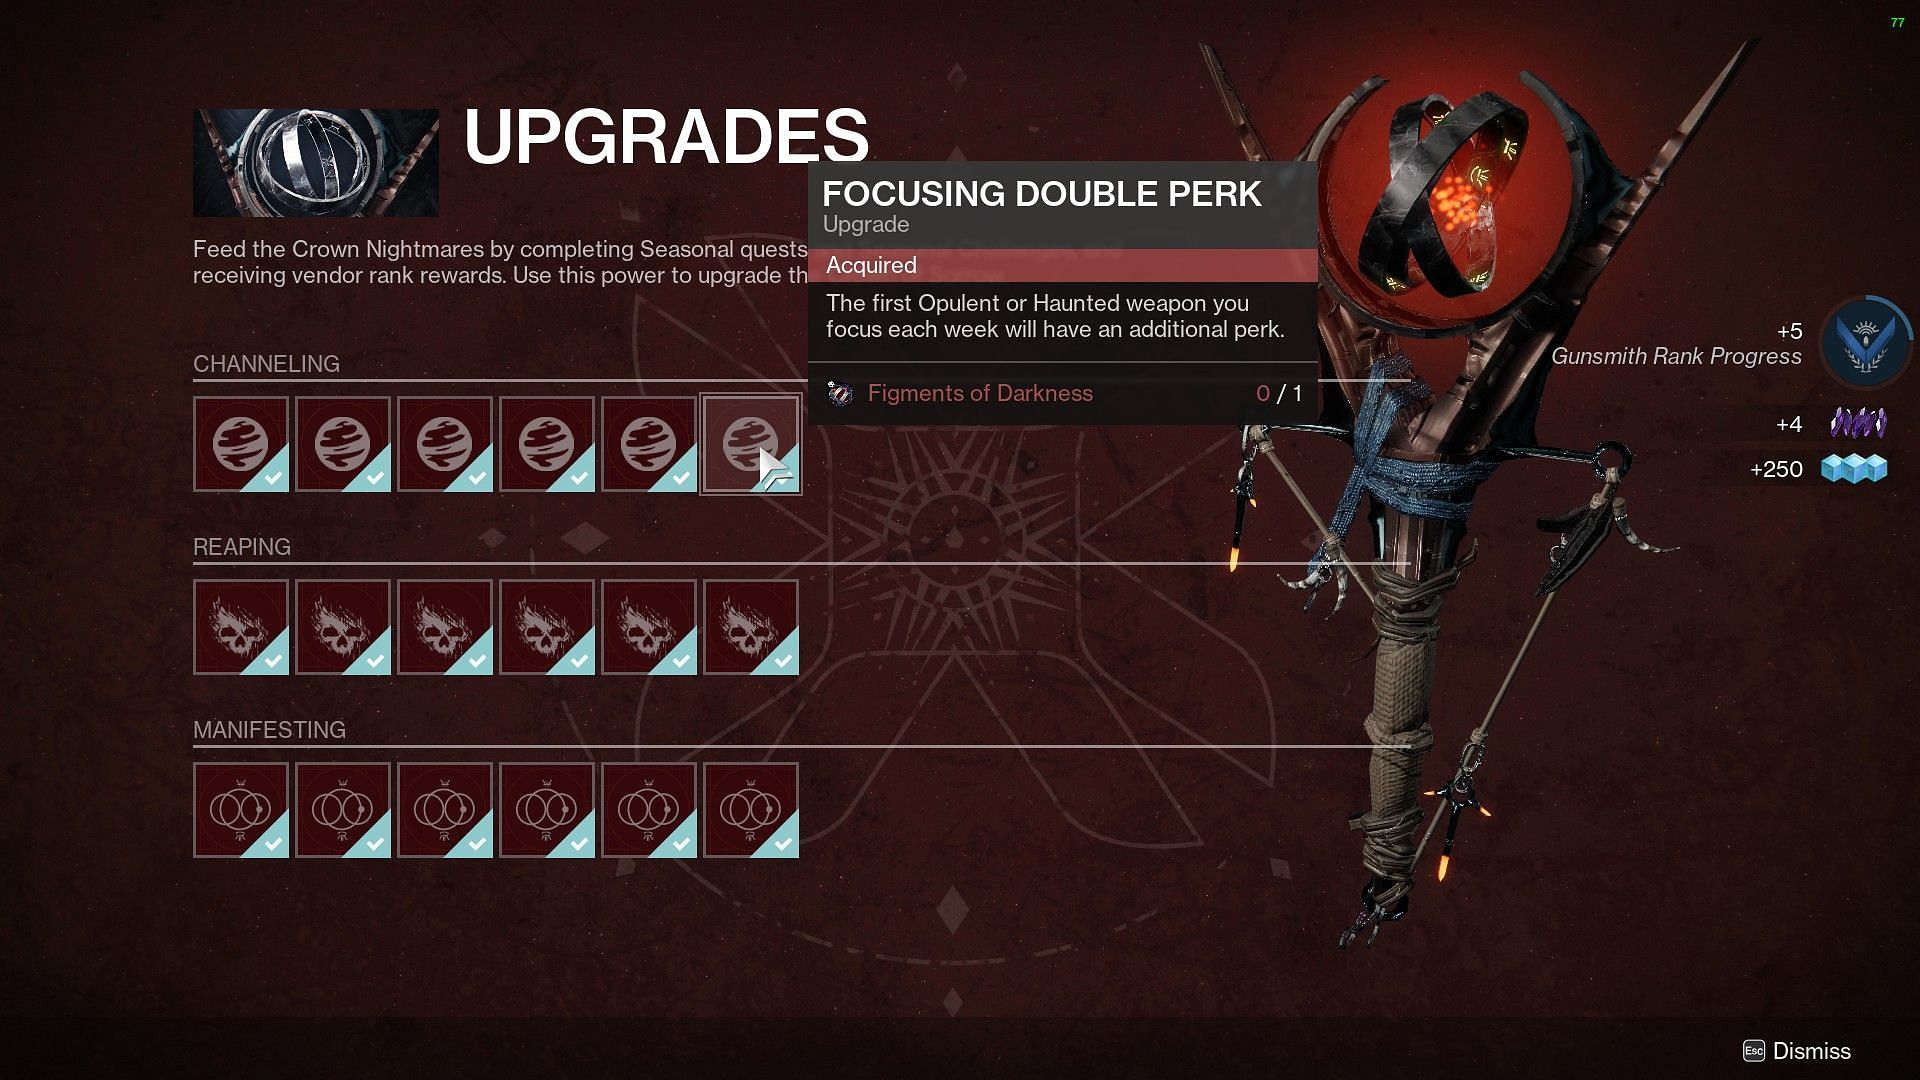 Focusing Double Perk (Image via Destiny 2)